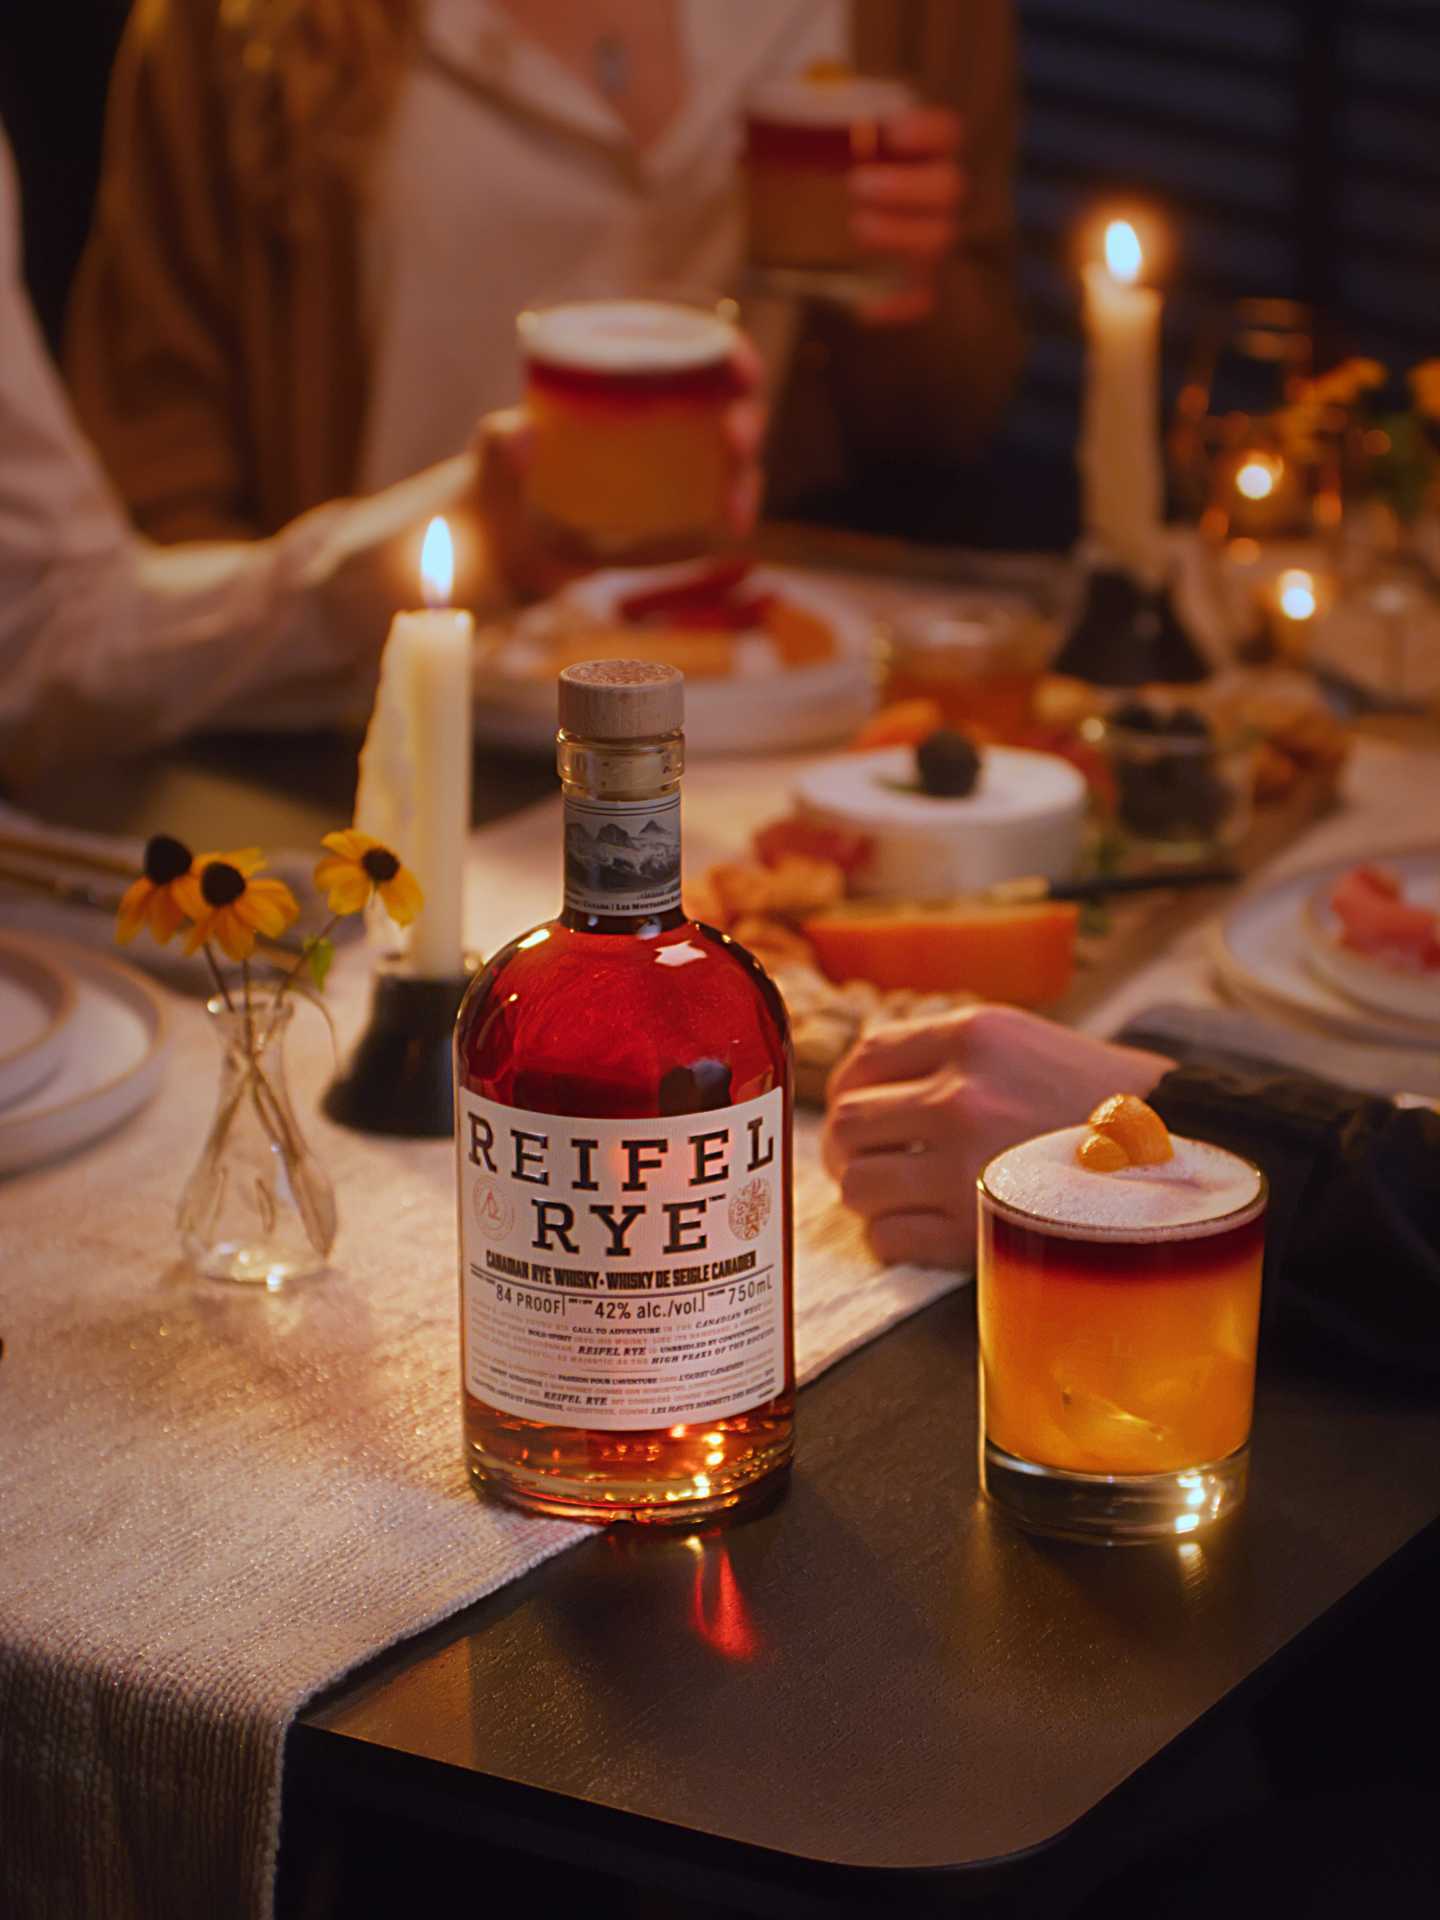 A bottle of Reifel Rye on the dinner table